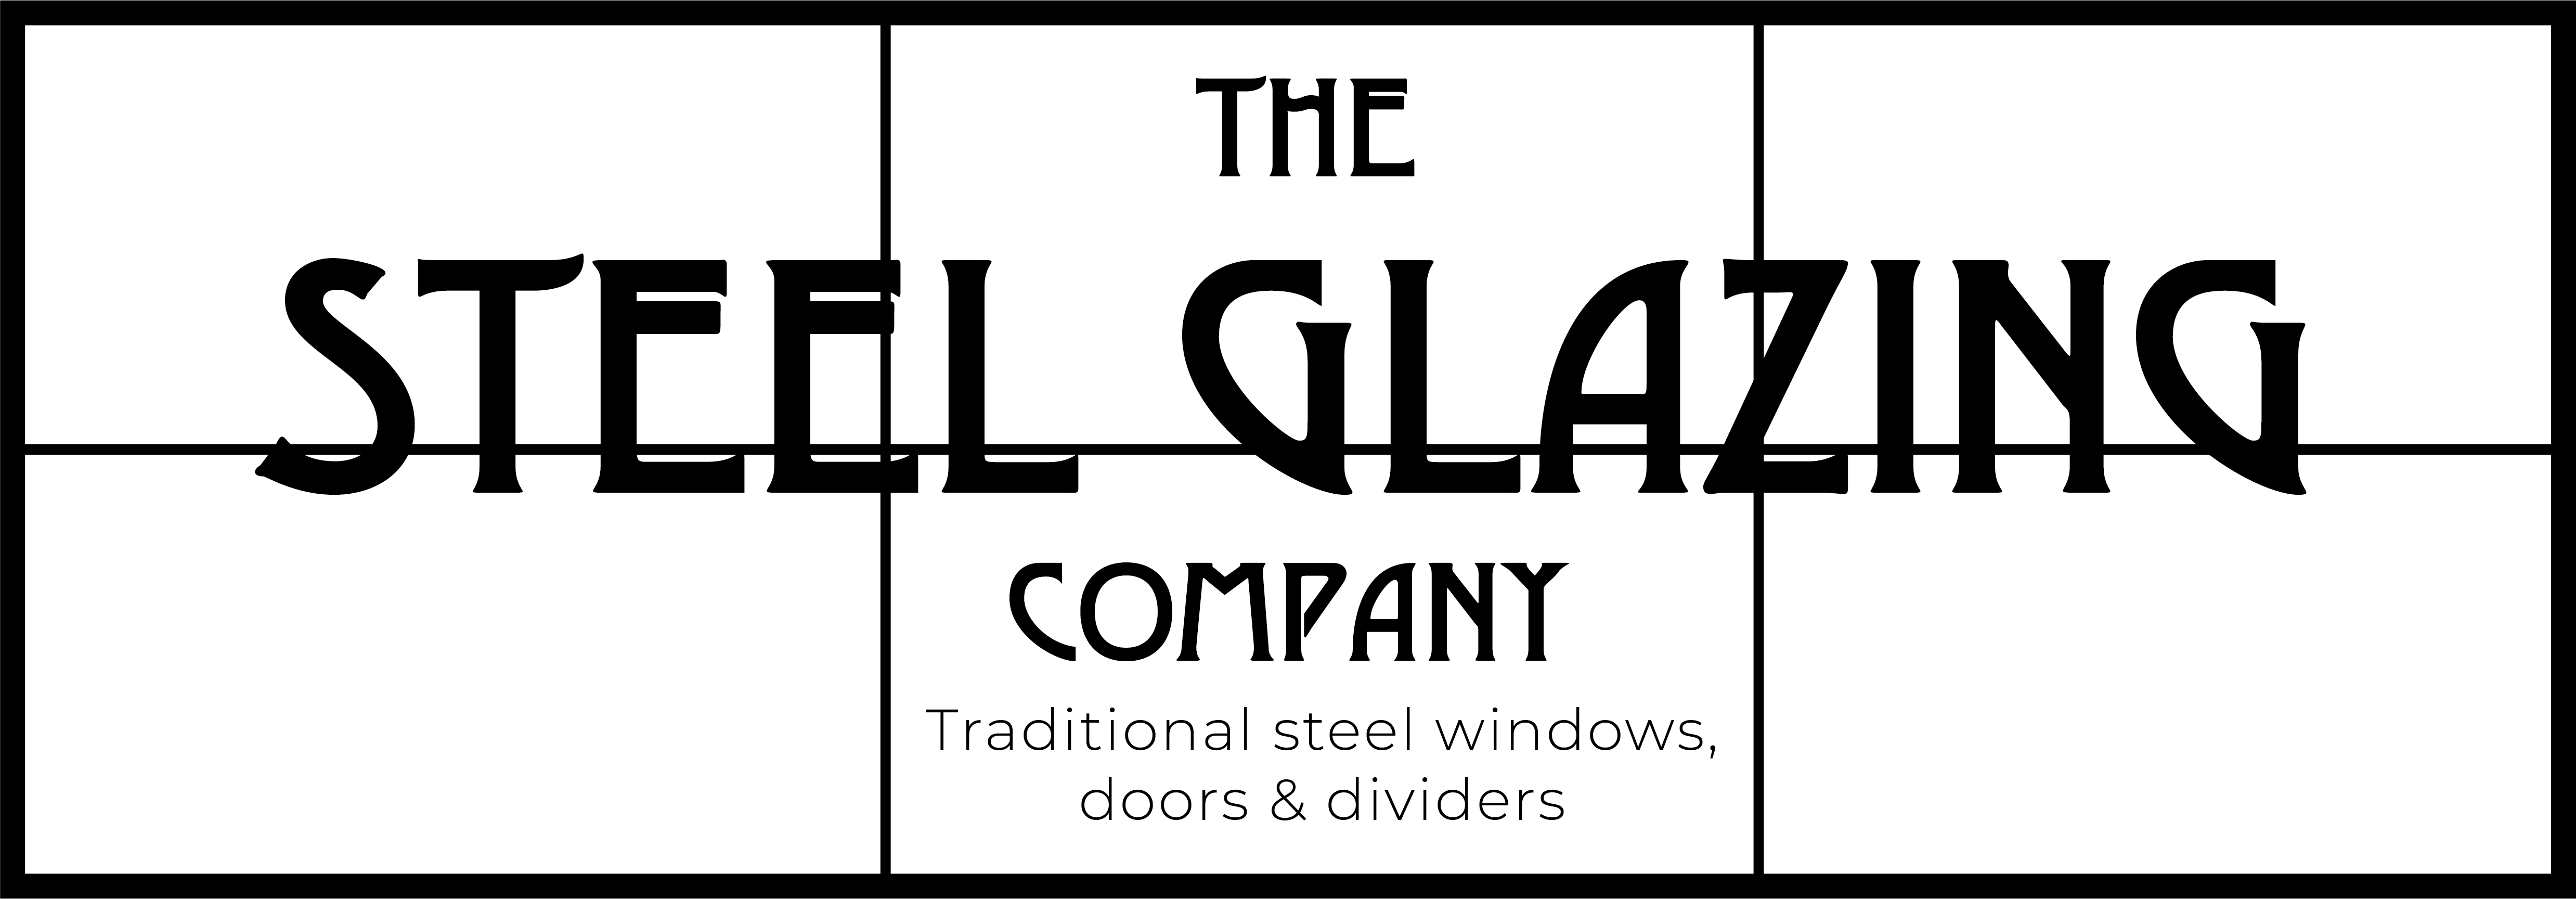 The Steel Glazing Company Logo